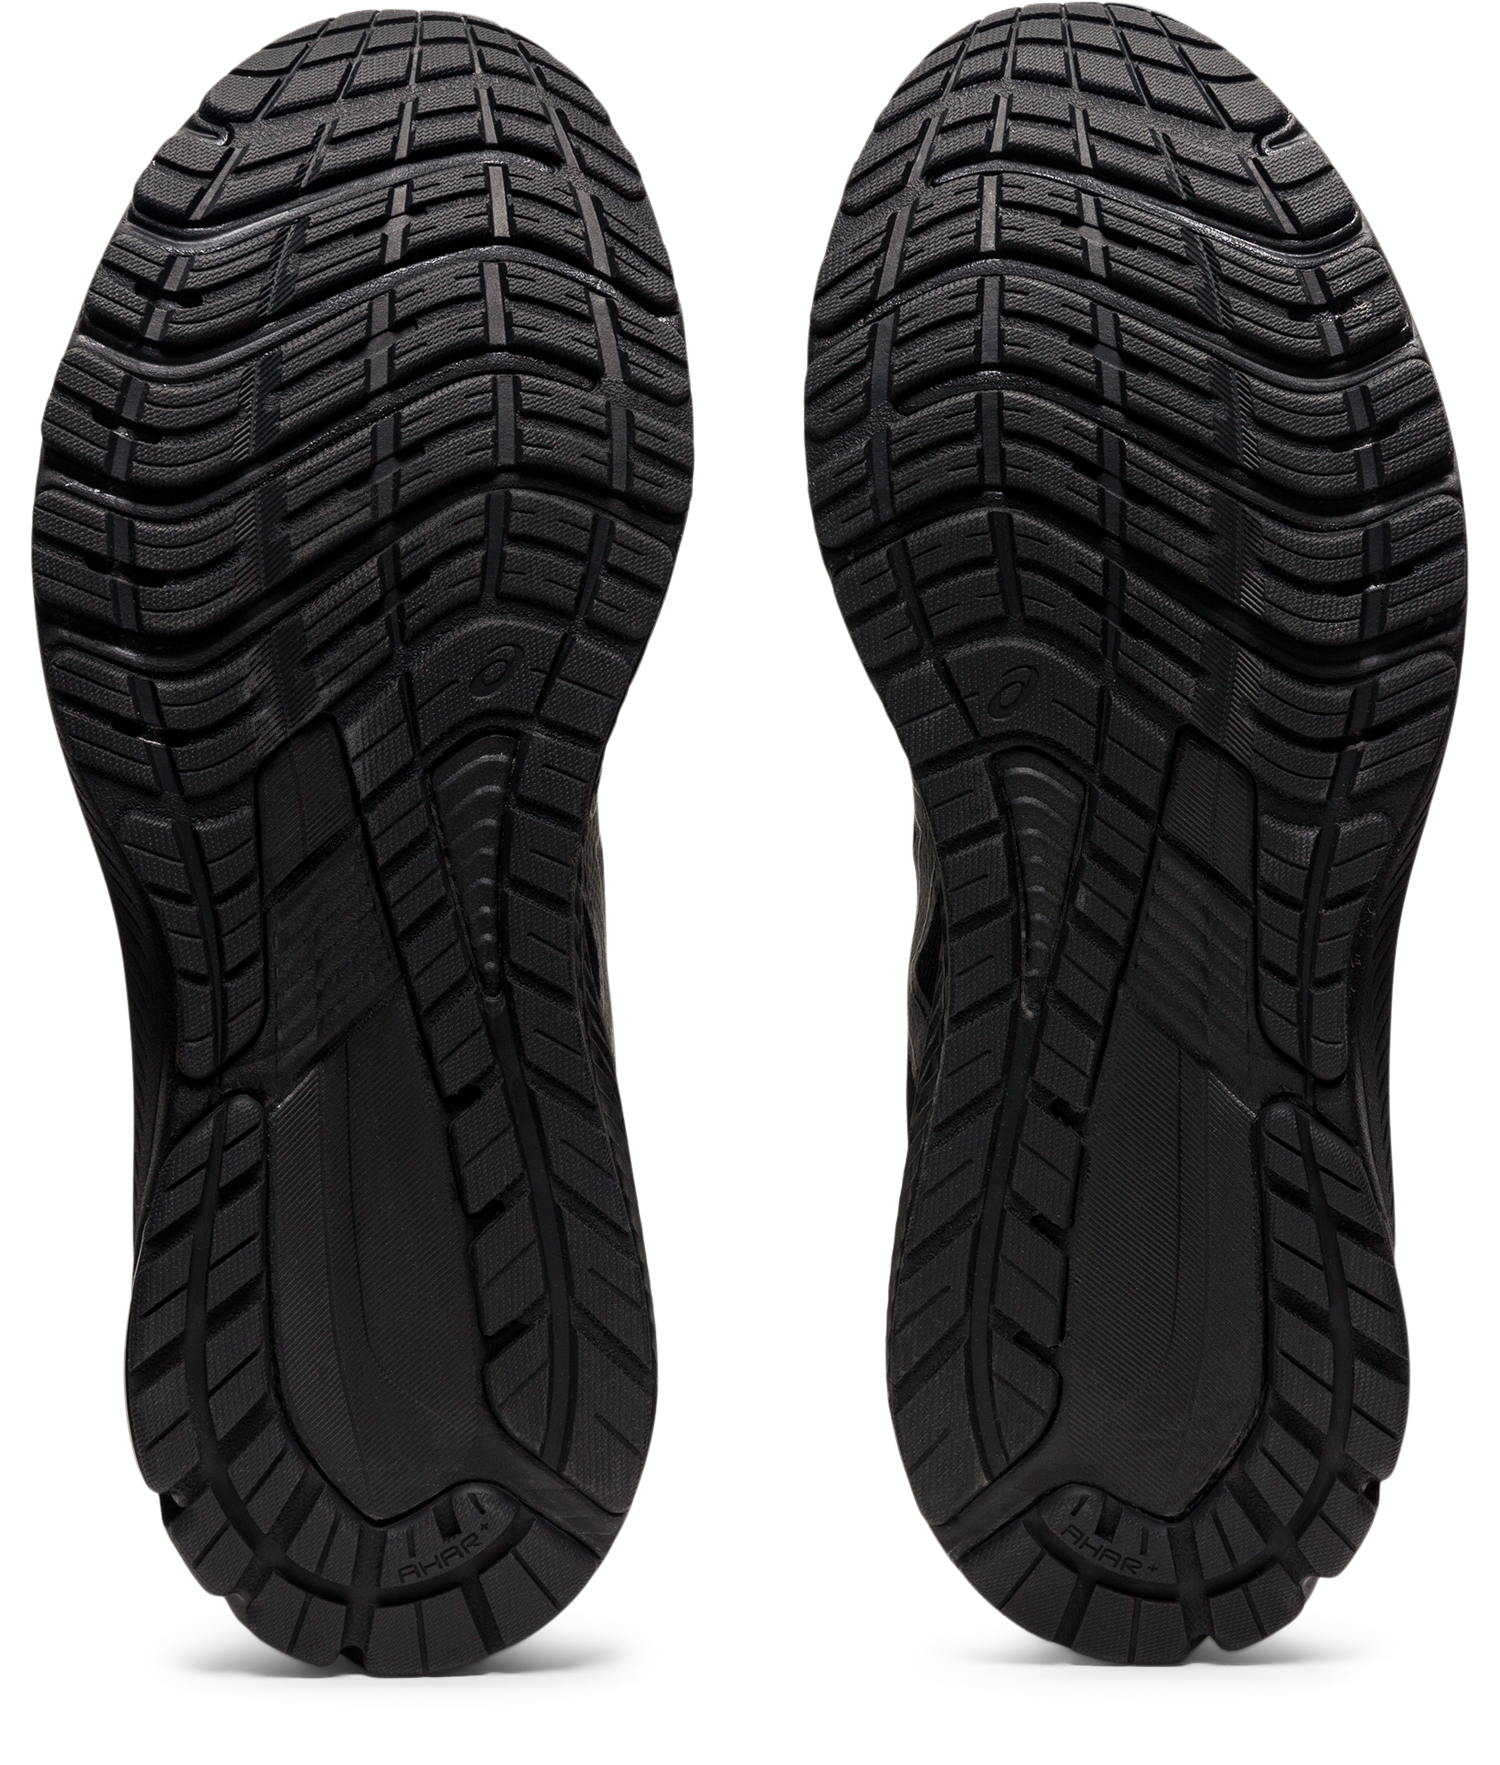 Asics Women's GT-1000 11 Wide (D) Running Shoes in Black/Black